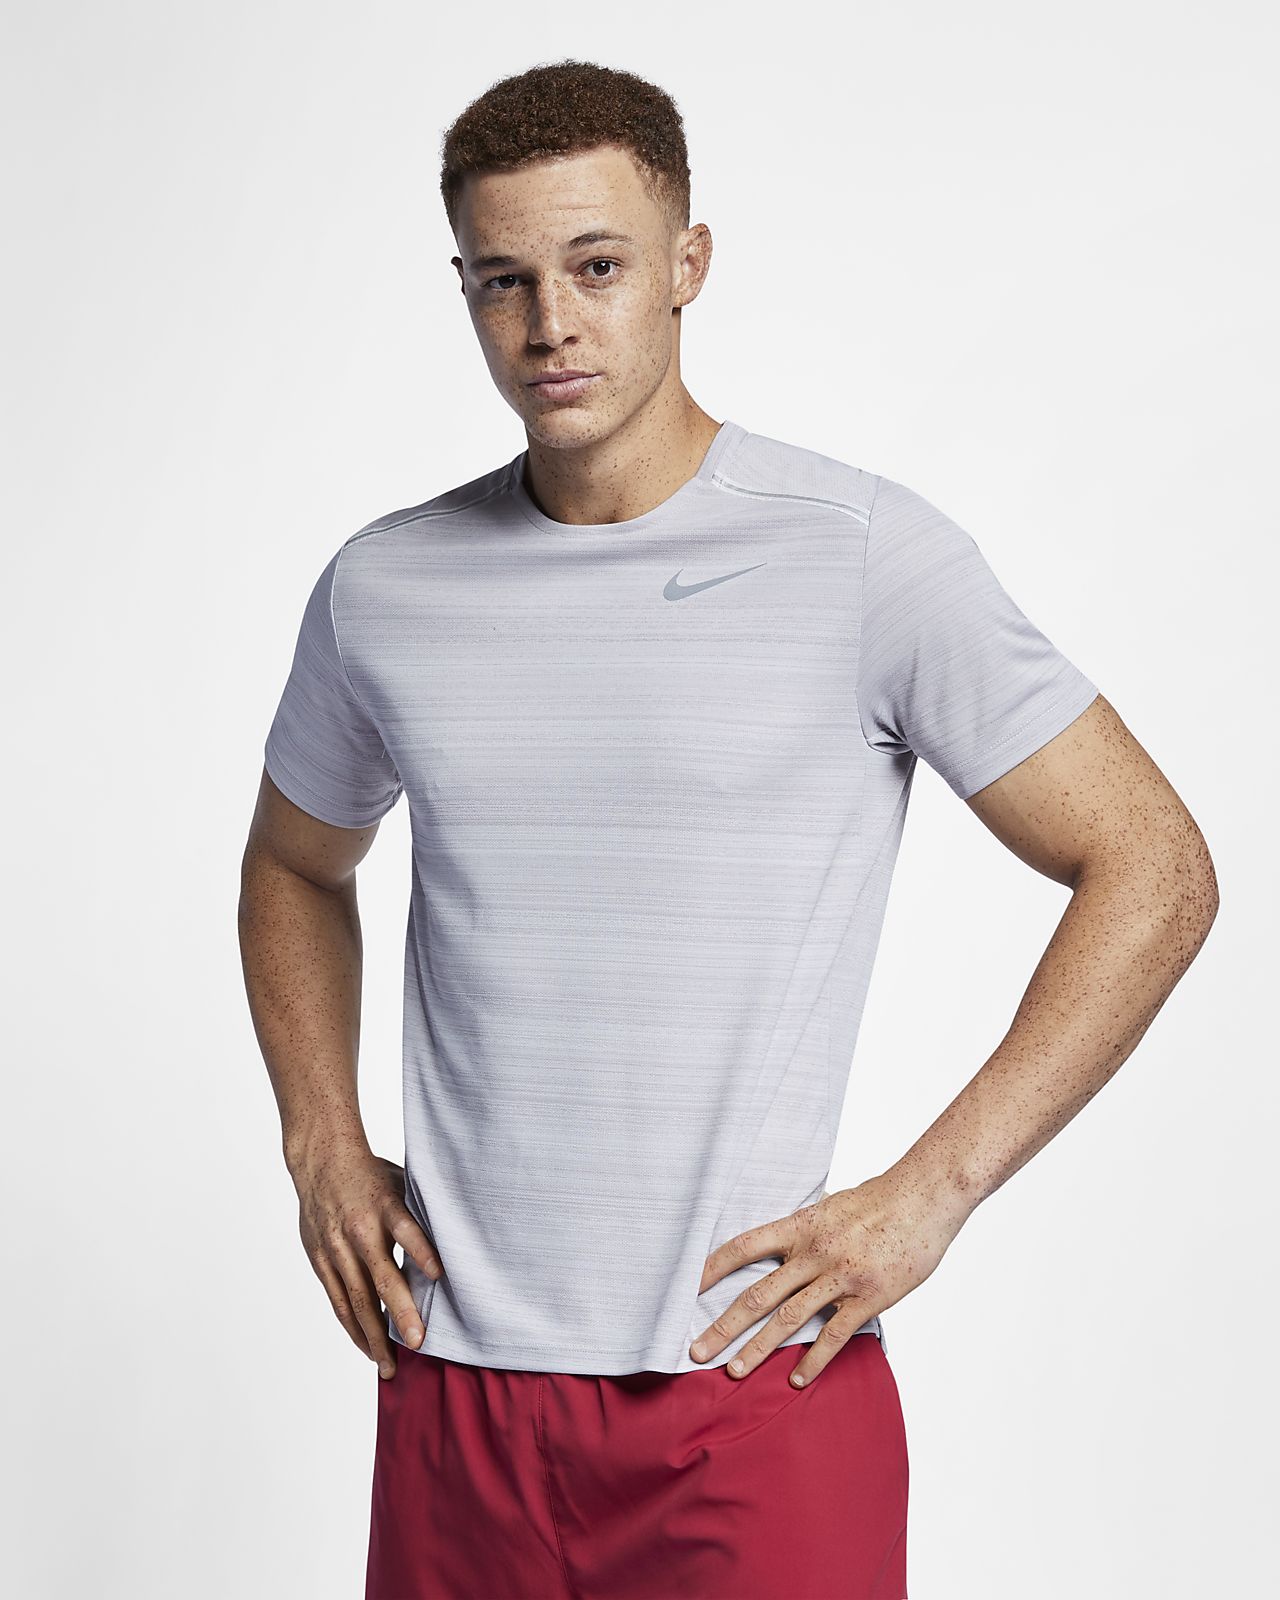 Nike Dri Fit T Shirt Size Chart